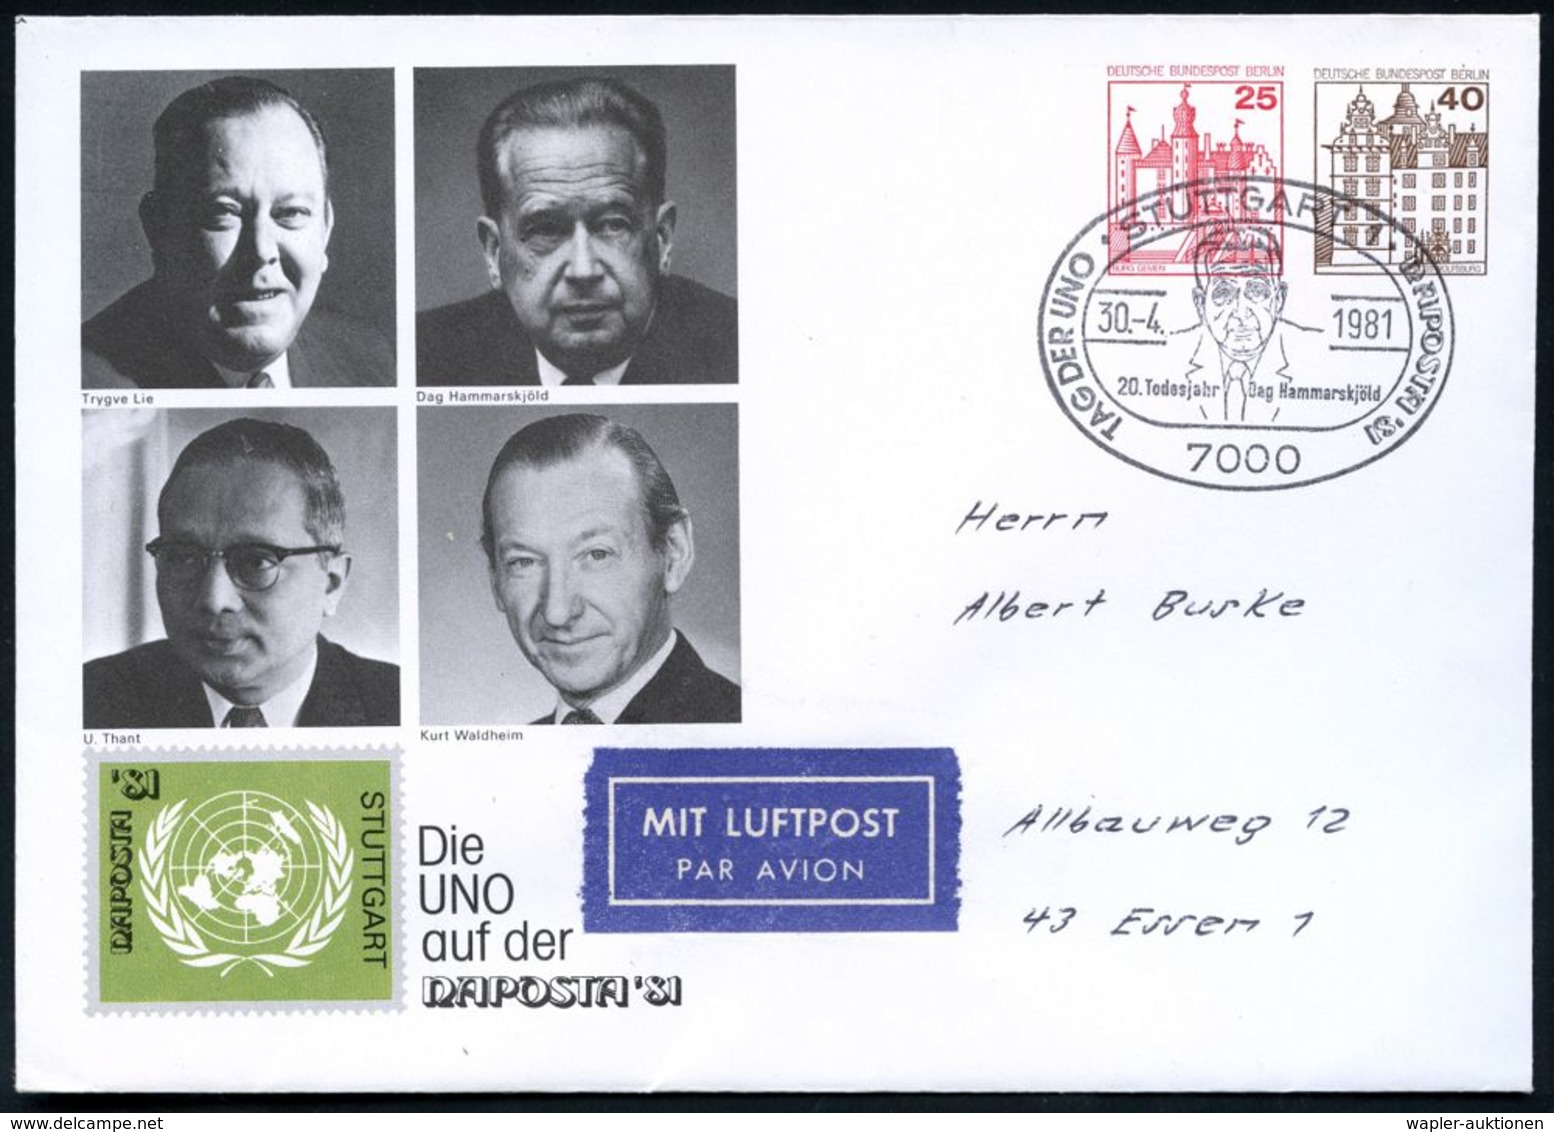 7000 STUTTGART 1/ TAG DER UNO/ 20.Todesjahr Dag Hammarsköld 1981 (30.4.) SSt (= Dag Hammarsköld, Friedens-Nobelpreis 196 - UNO